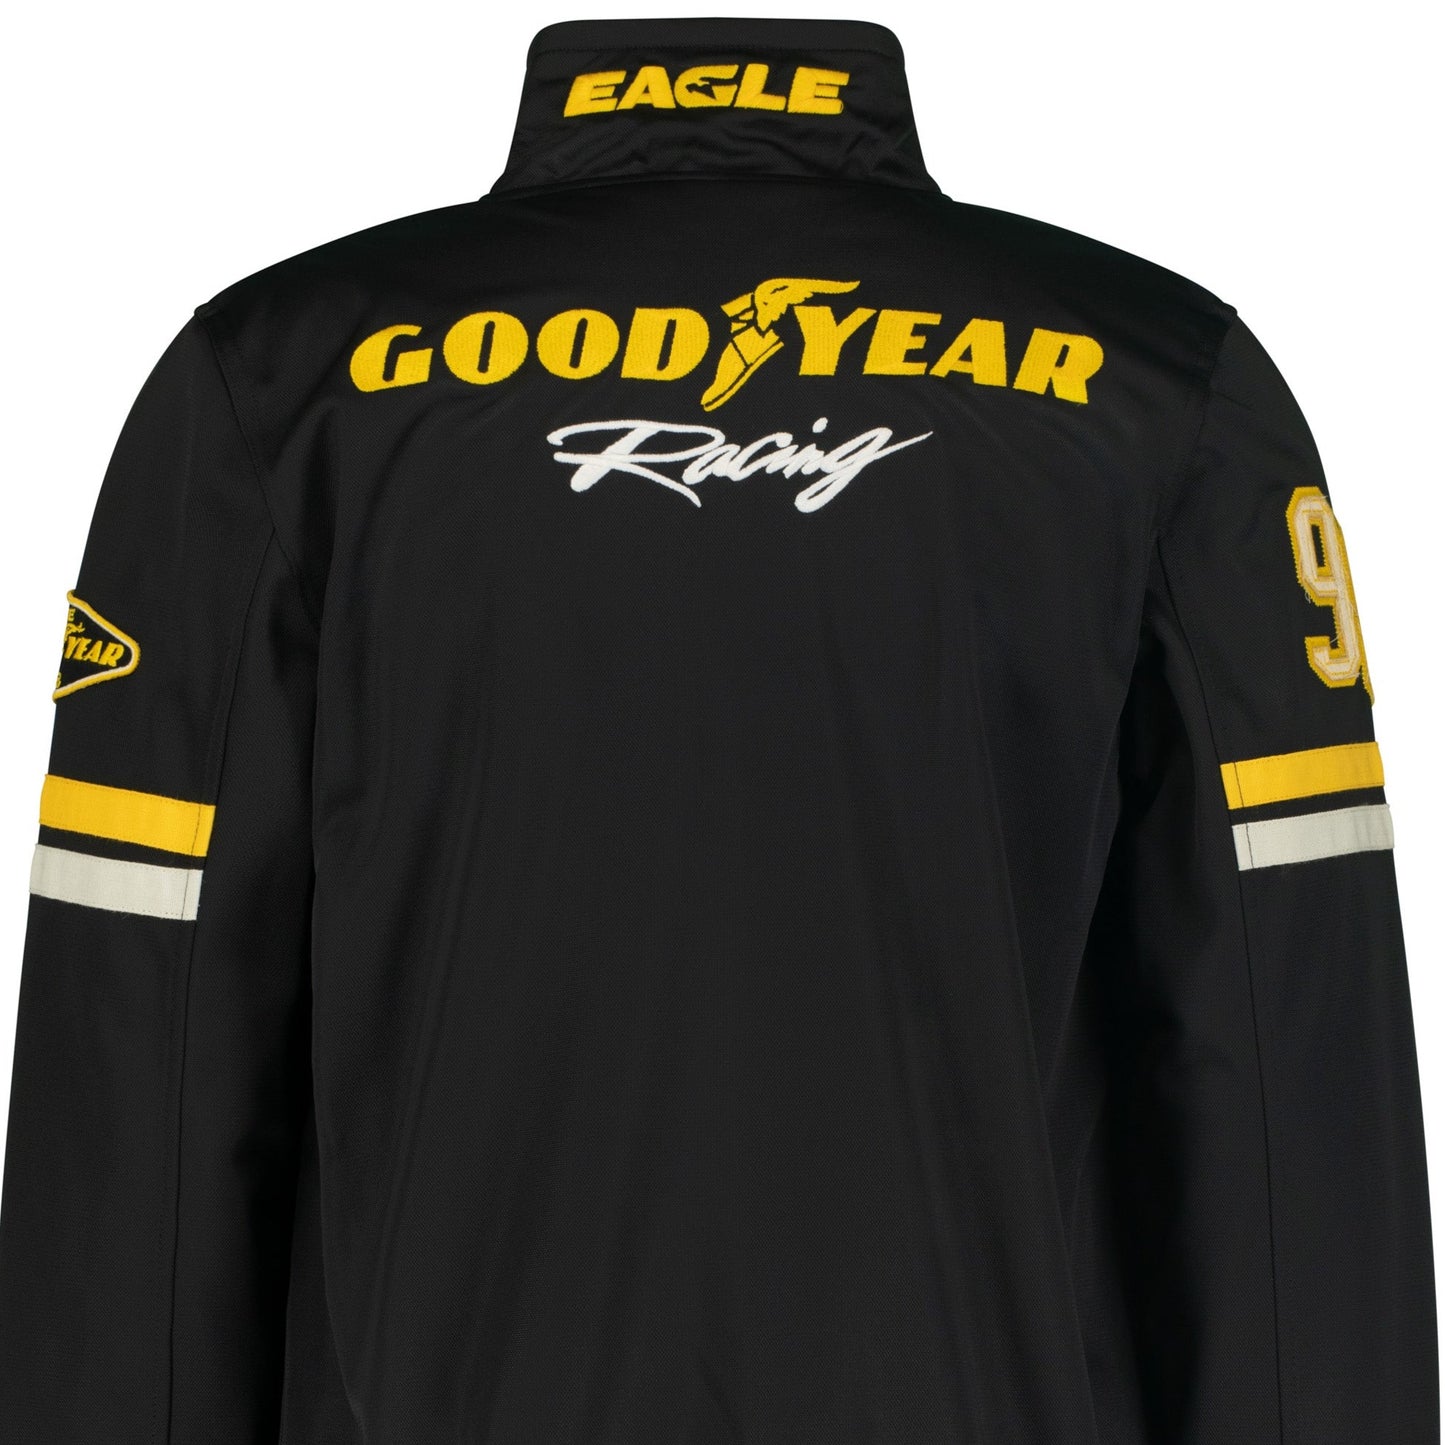 Chattanooga Goodyear Racing Jacket